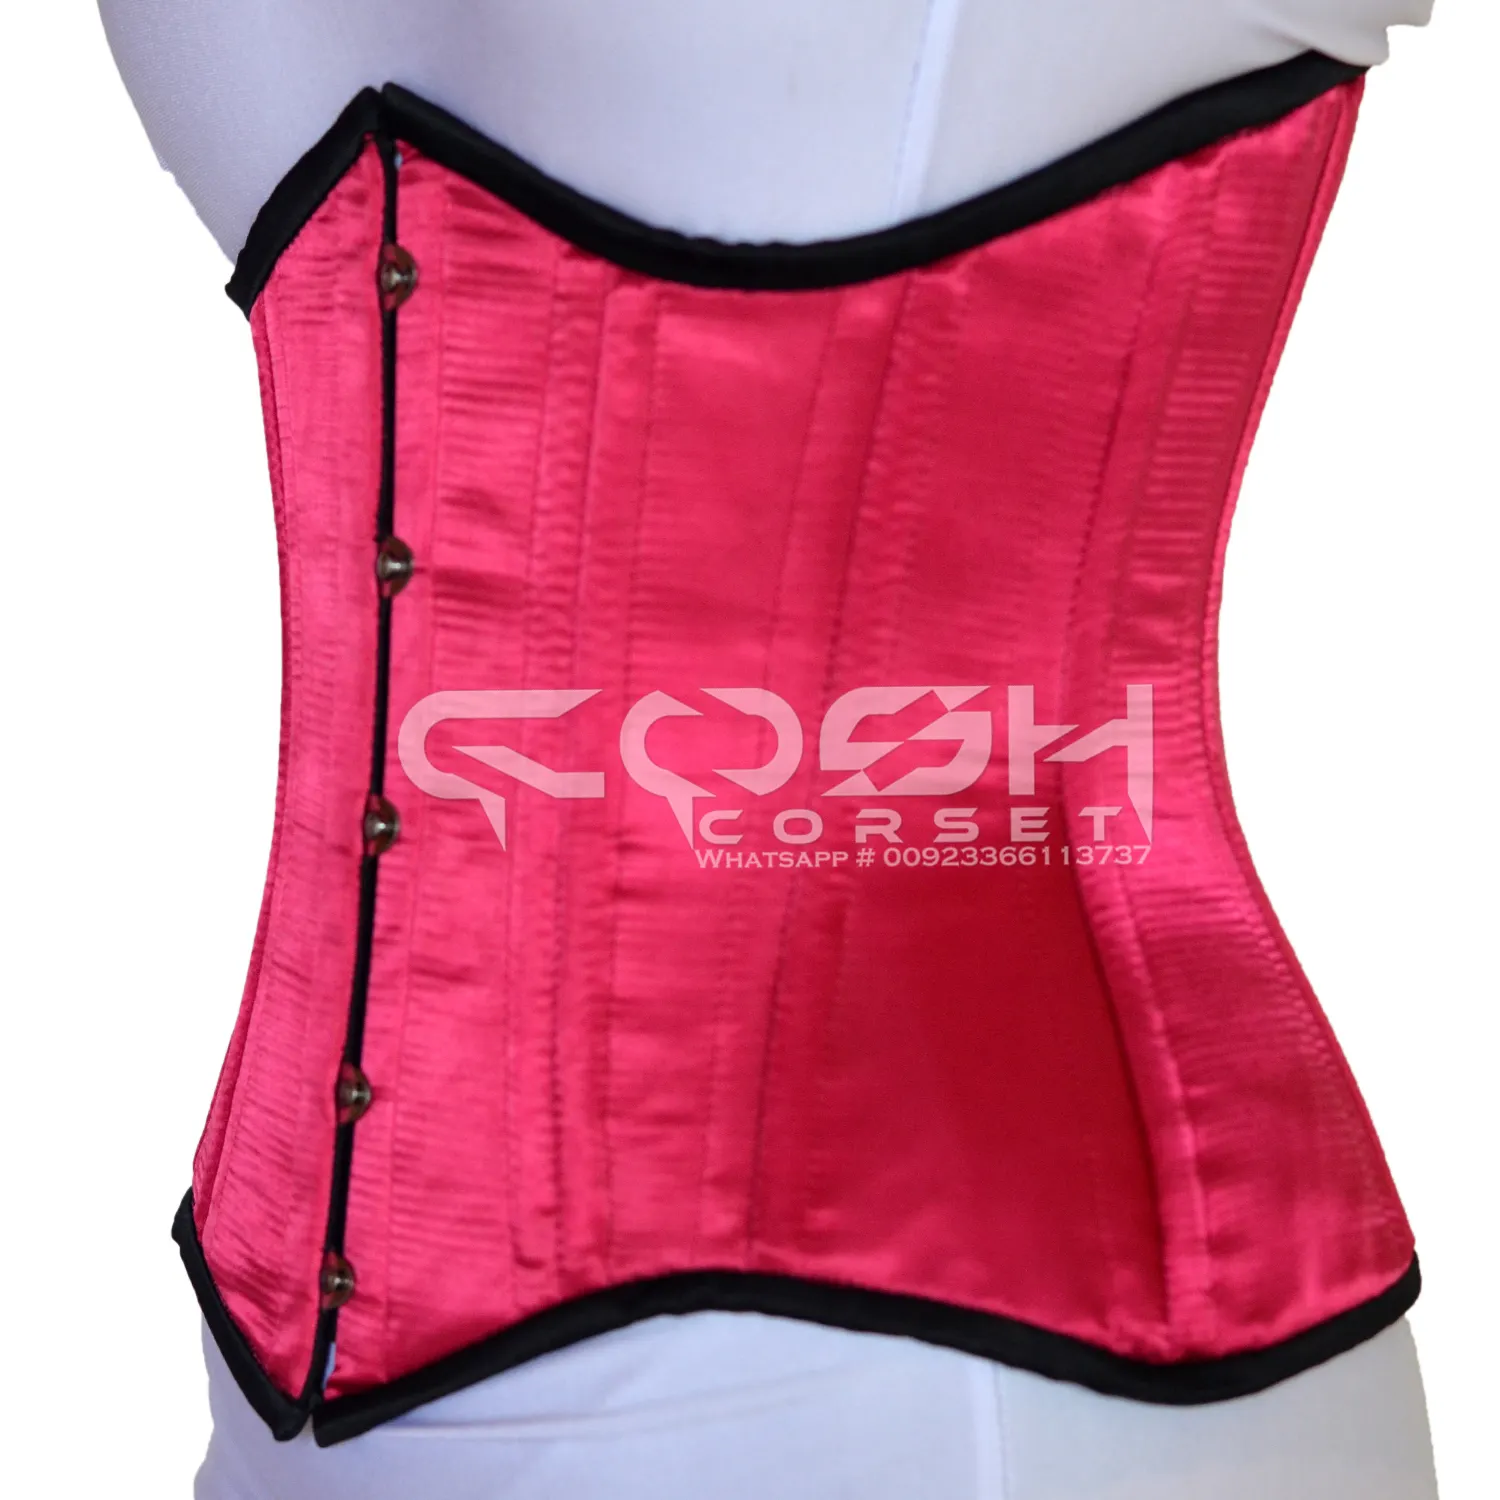 COSH-corsé moldeador de cuerpo y cintura, corsé de satén rosa de alta calidad con adorno de satén negro